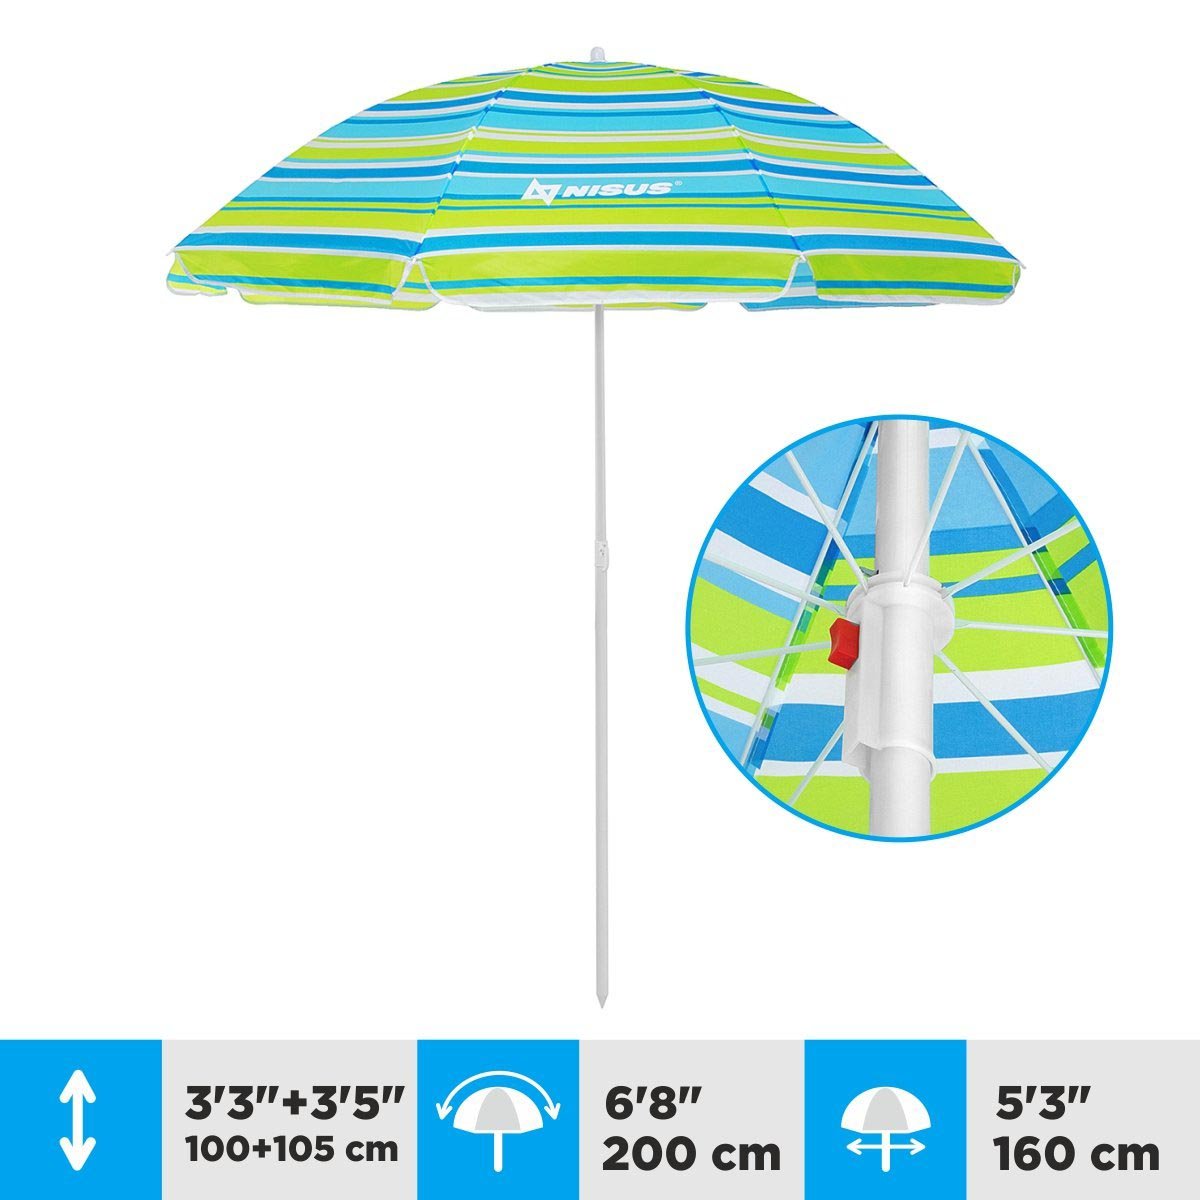 A 5.3 ft Sea-Green Folding Beach Umbrella is 6.3 feet high